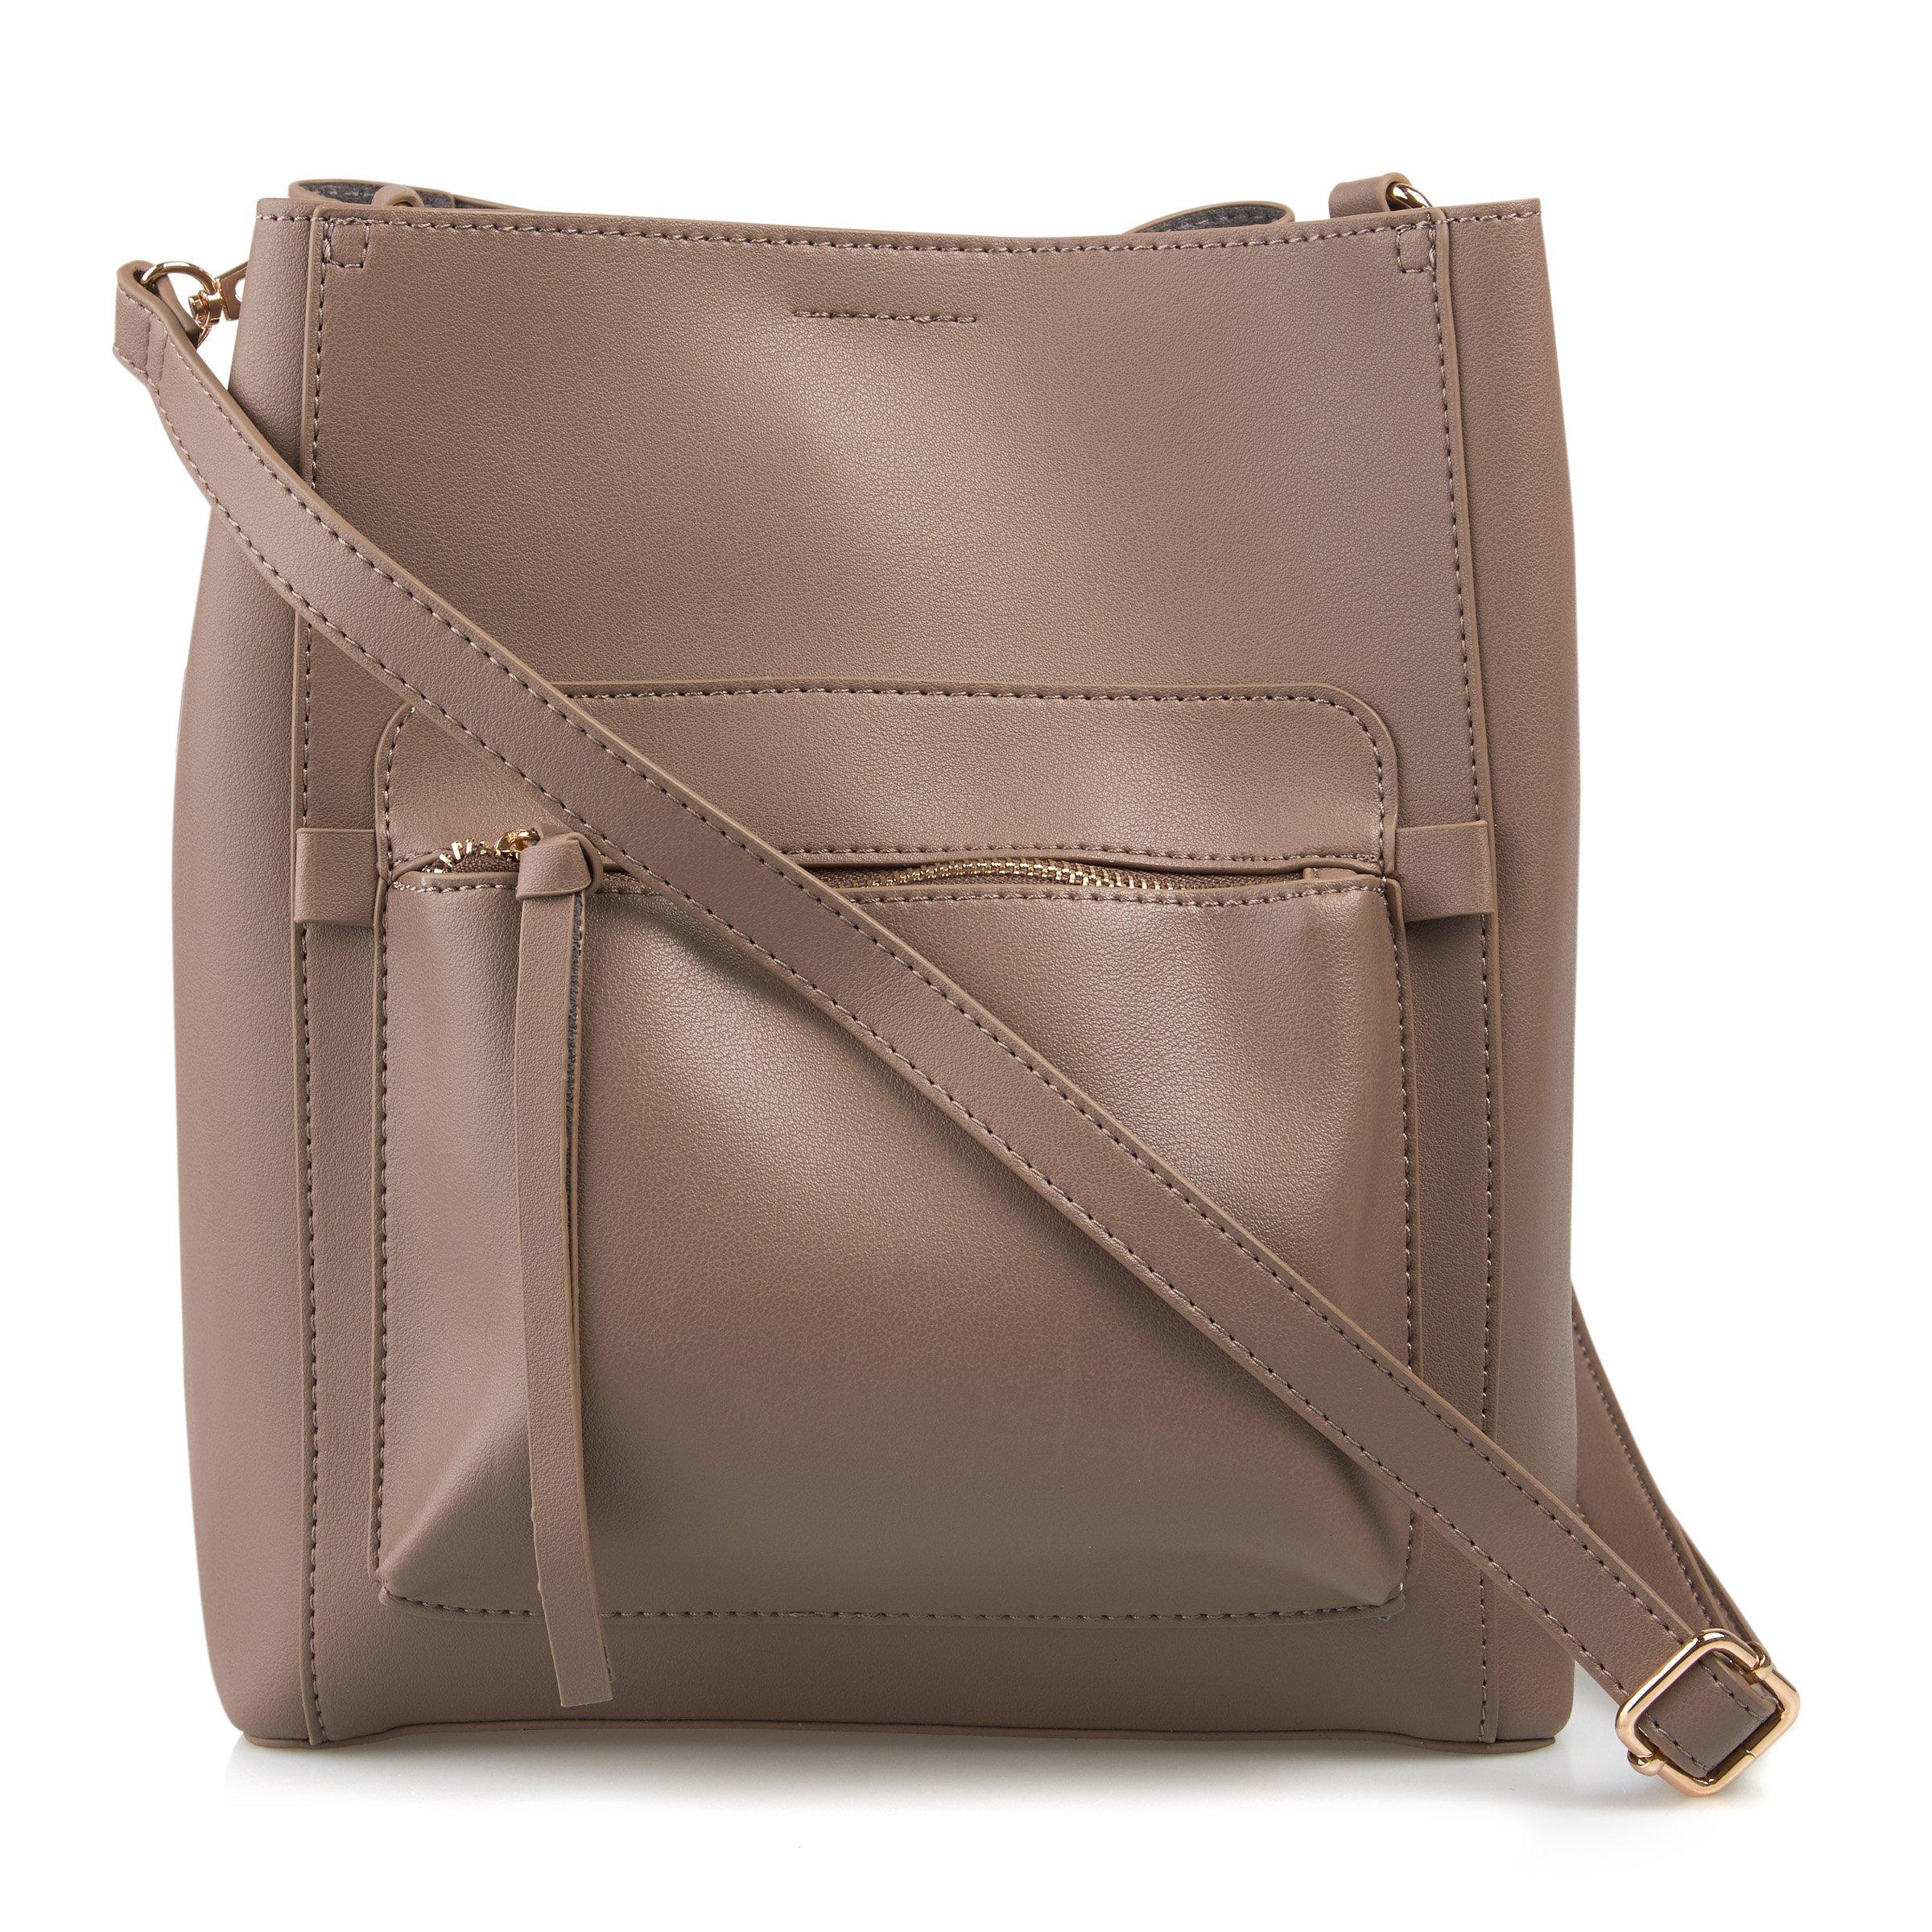 Ladies Bags | Purses, Clutches & More Online